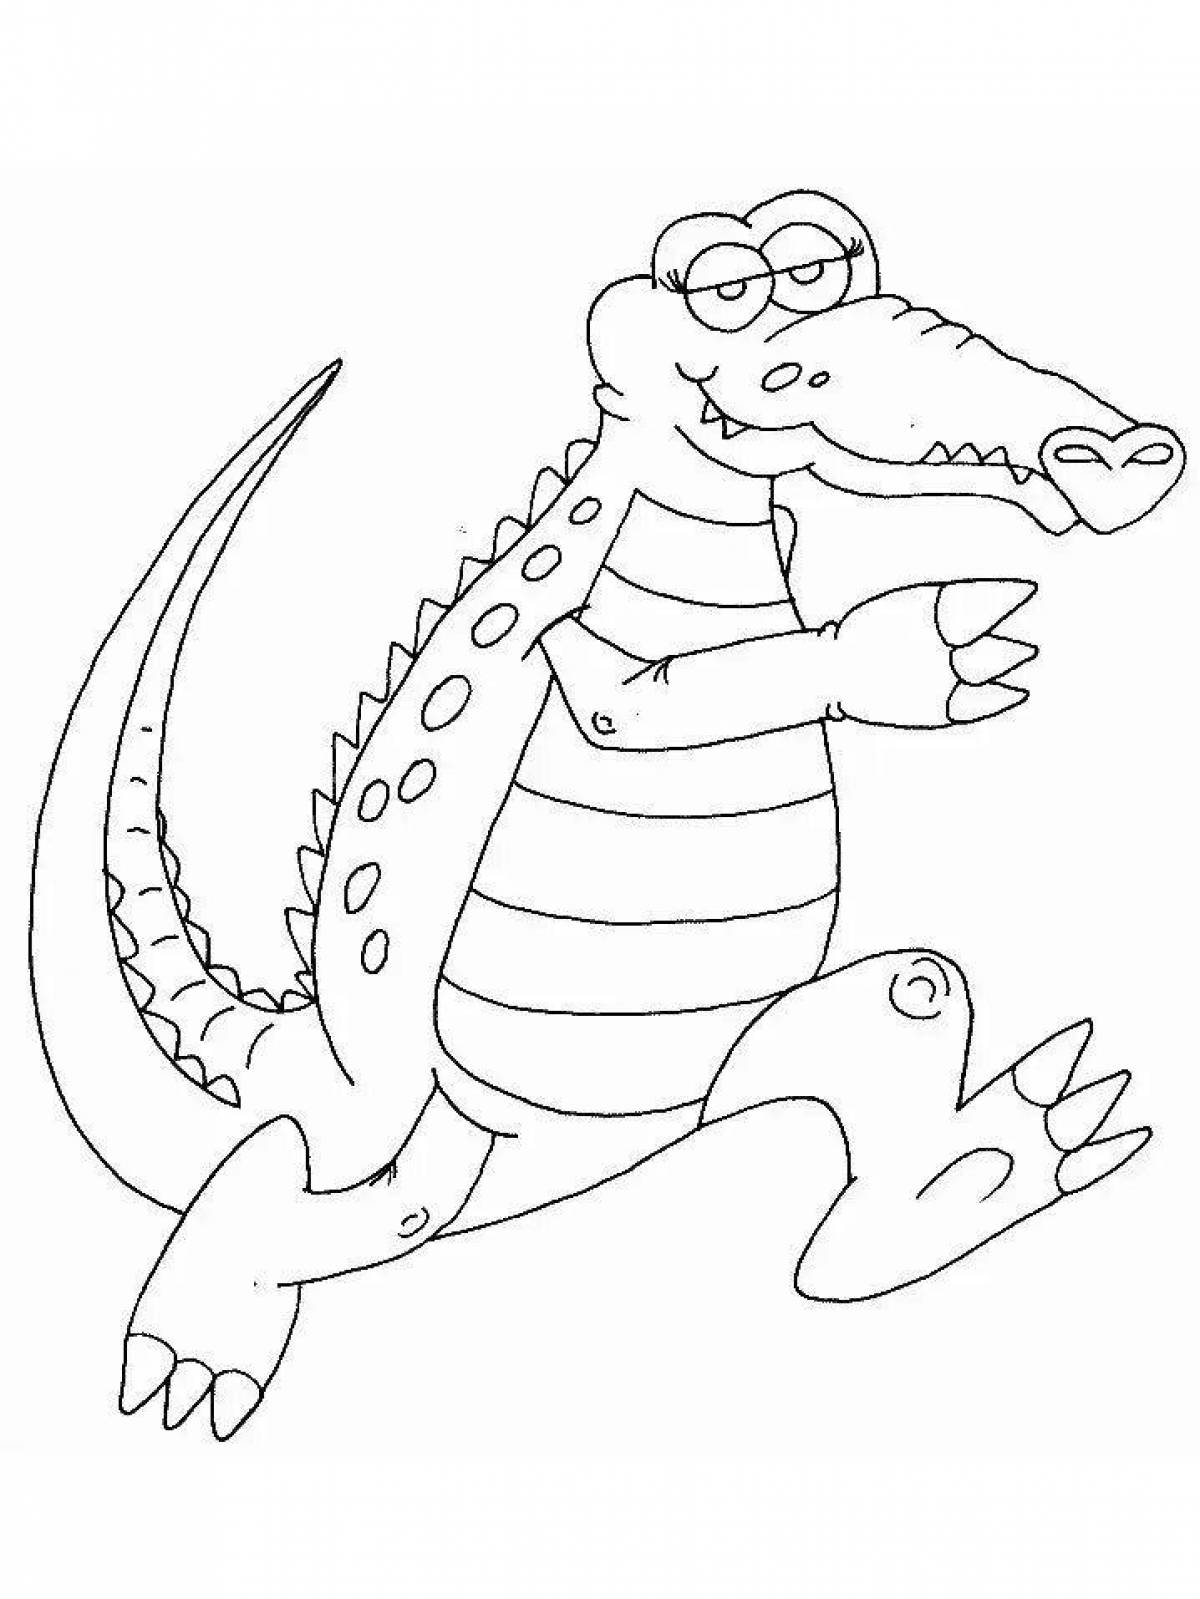 Coloring book cheeky crocodile